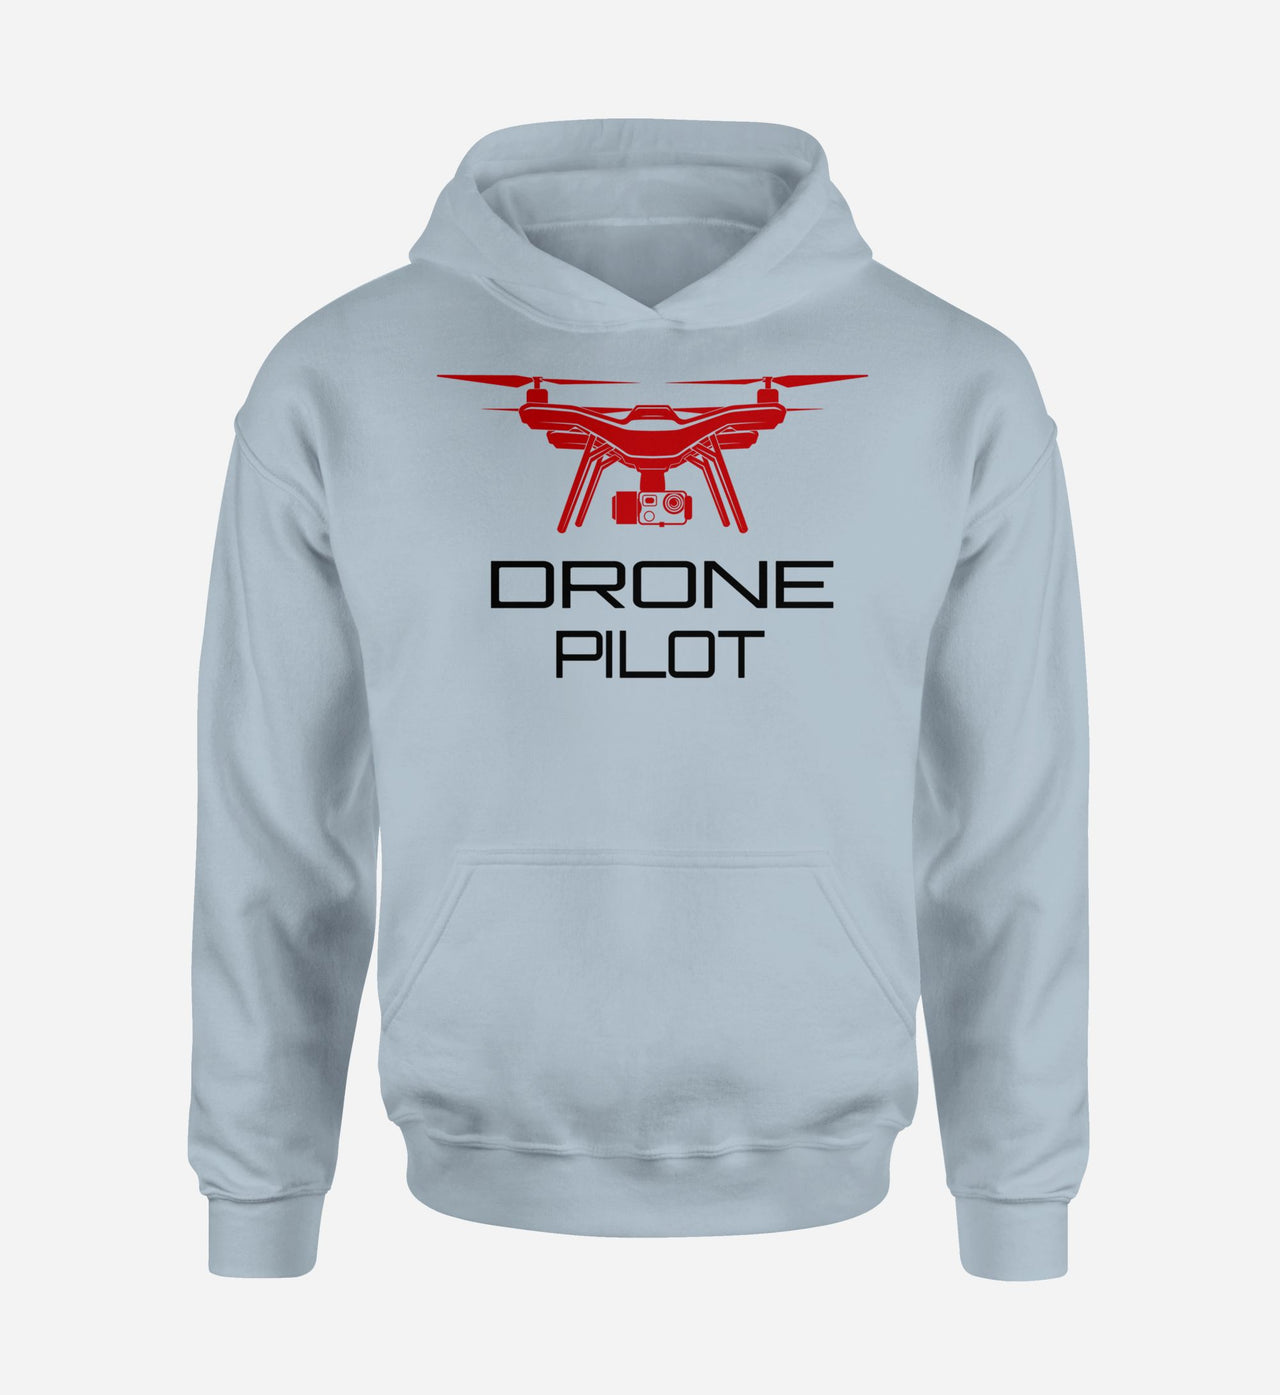 Drone Pilot Designed Hoodies